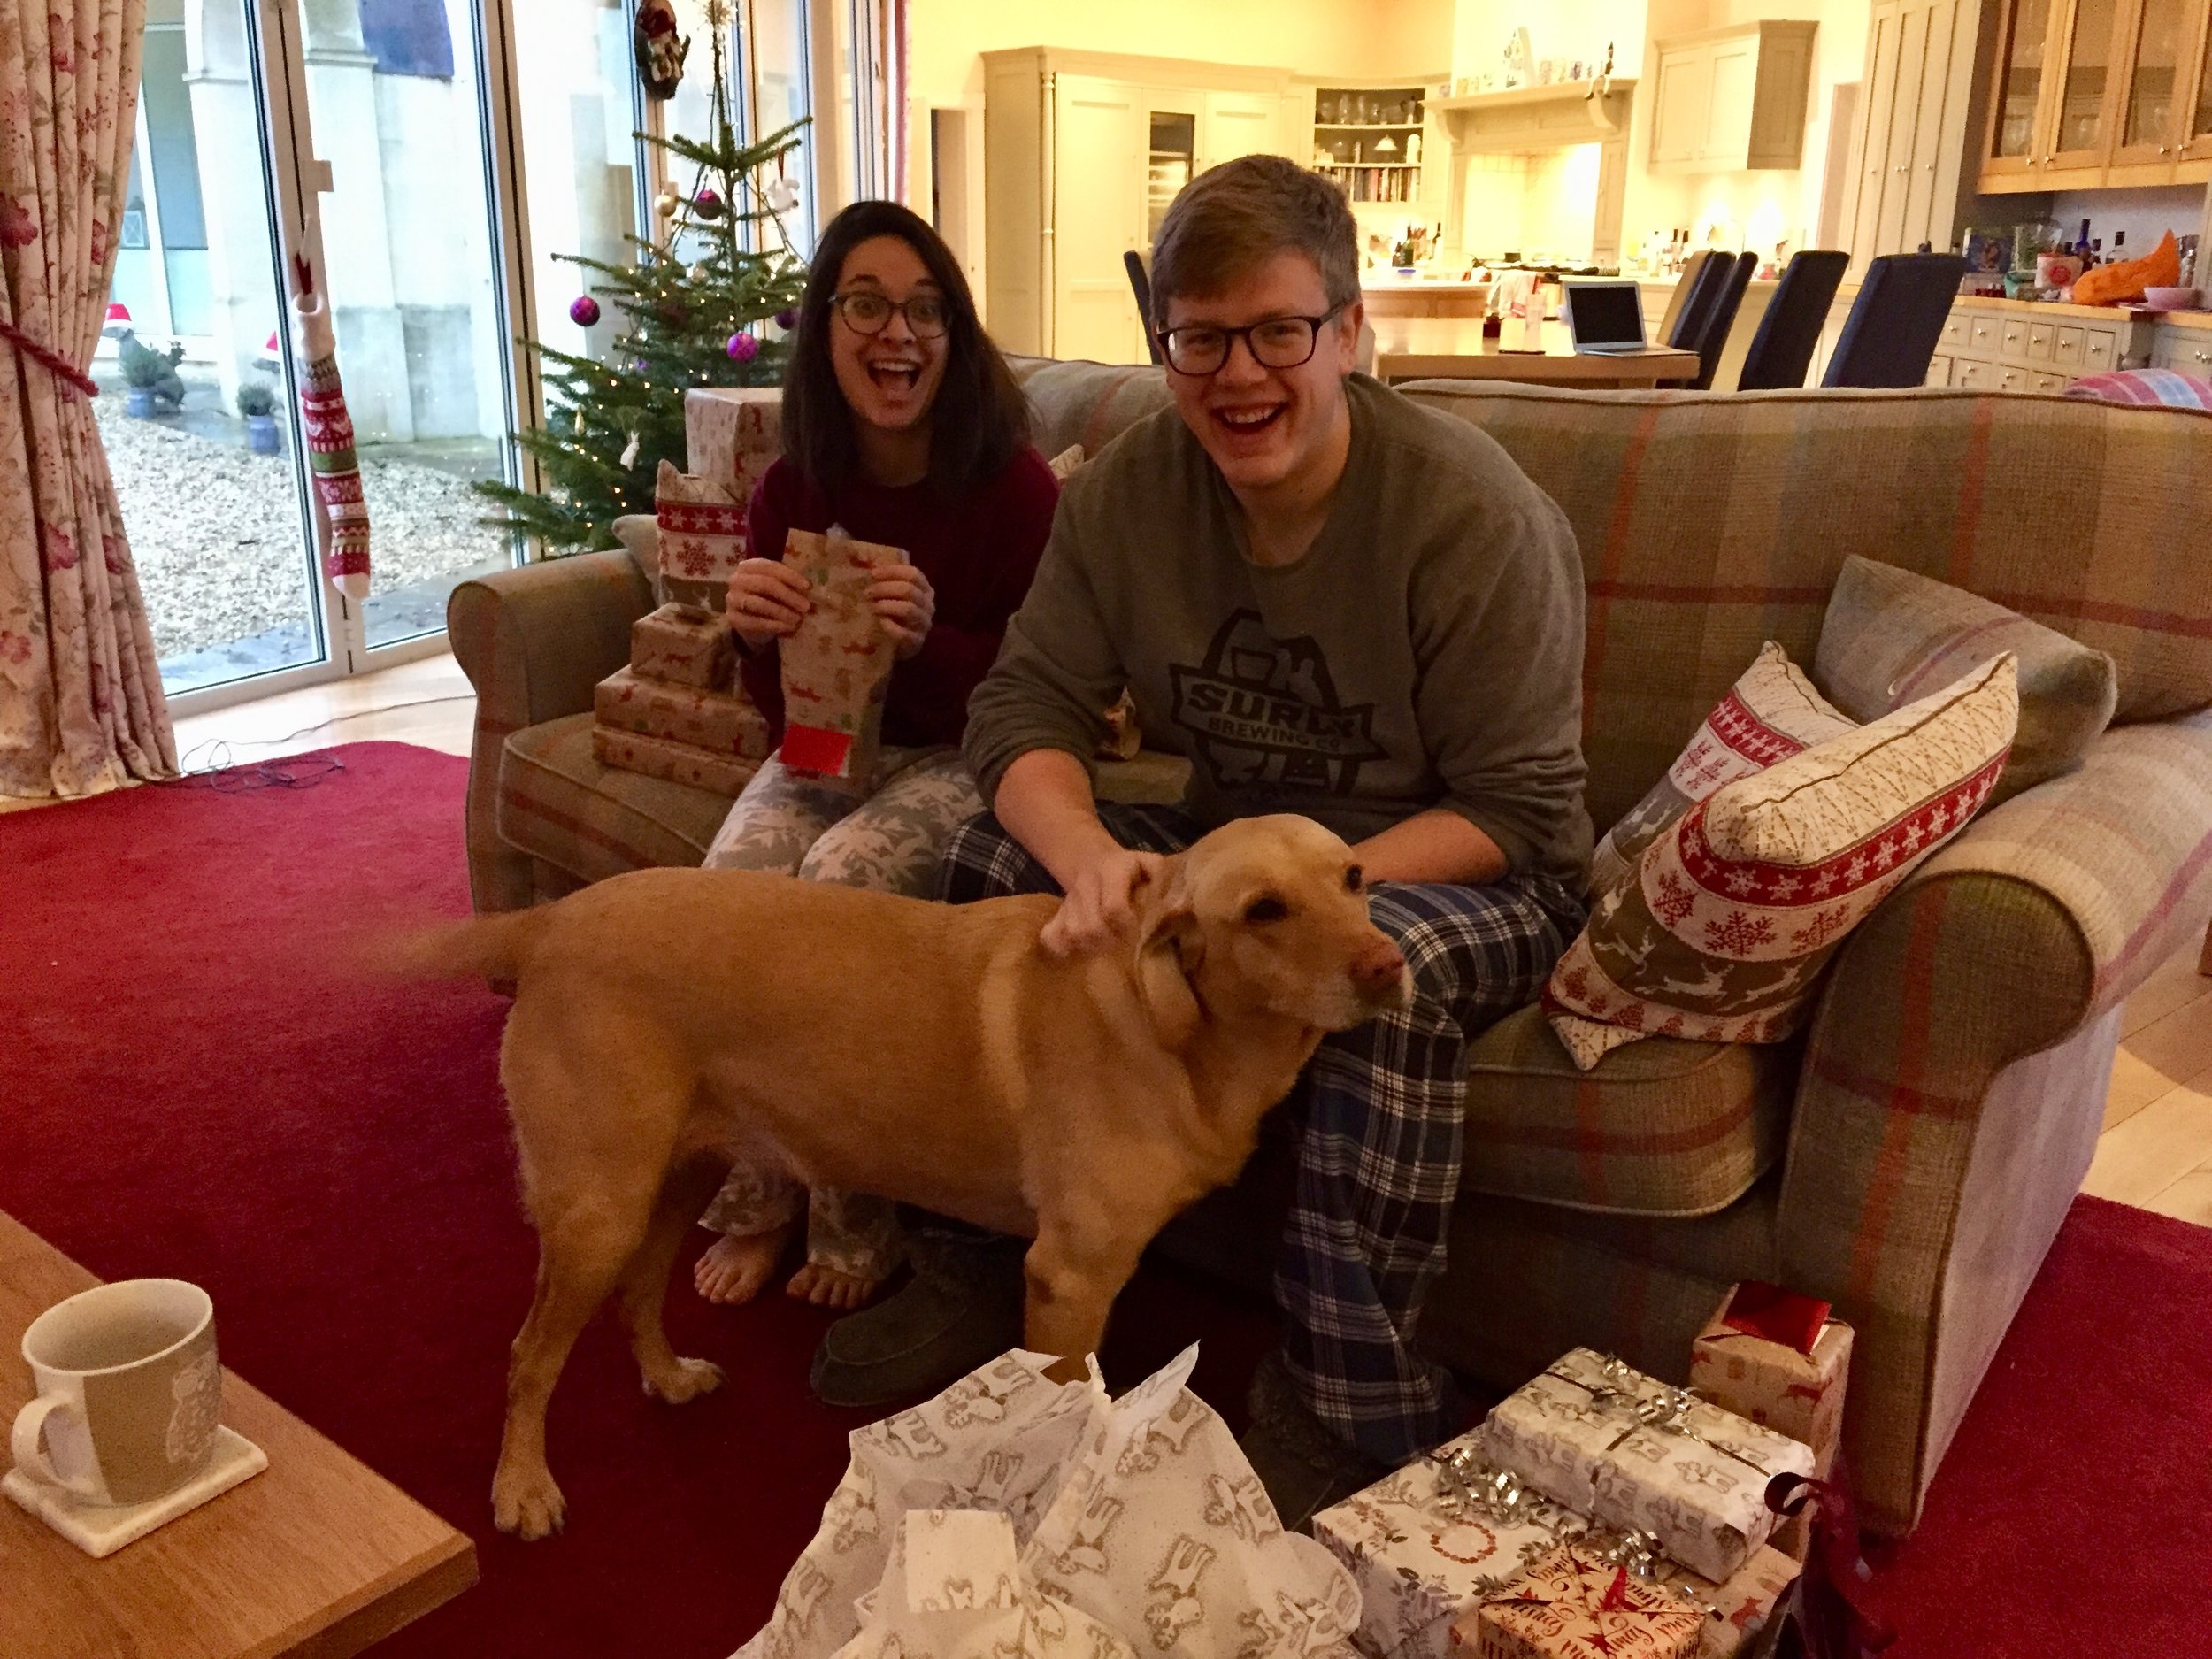 Brook is helping open presents